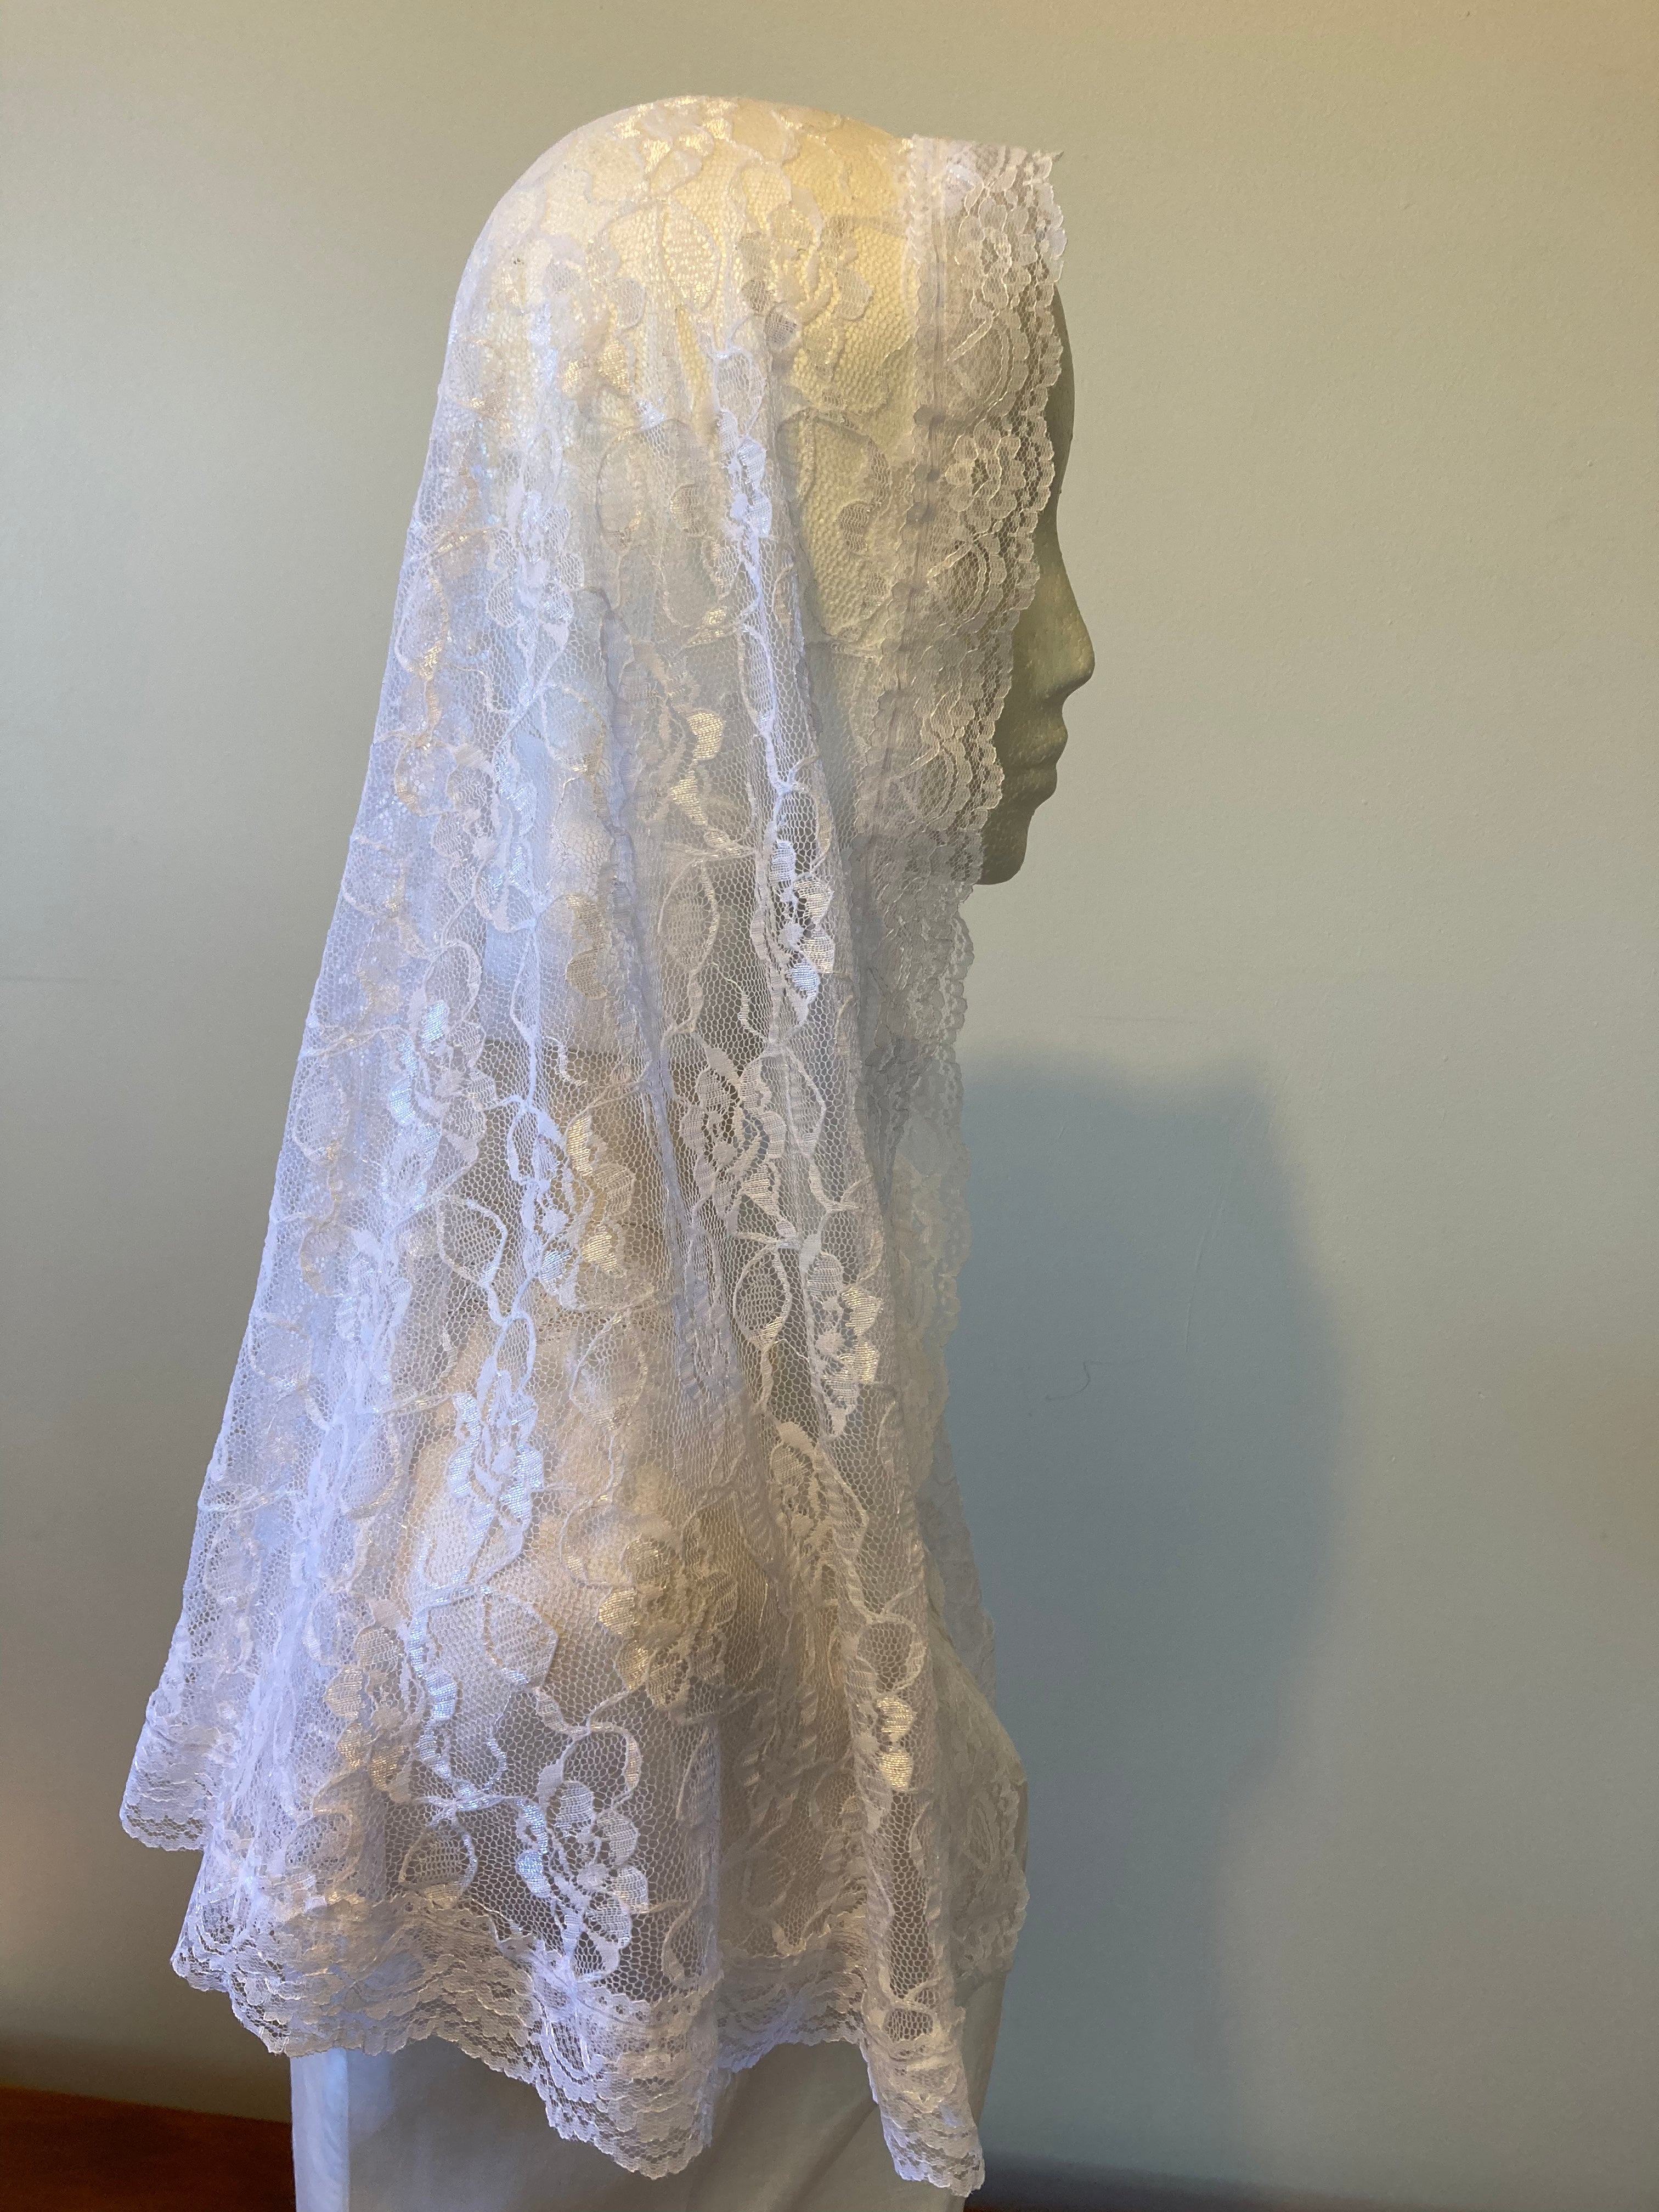 St Elizabeth of Hungary veil